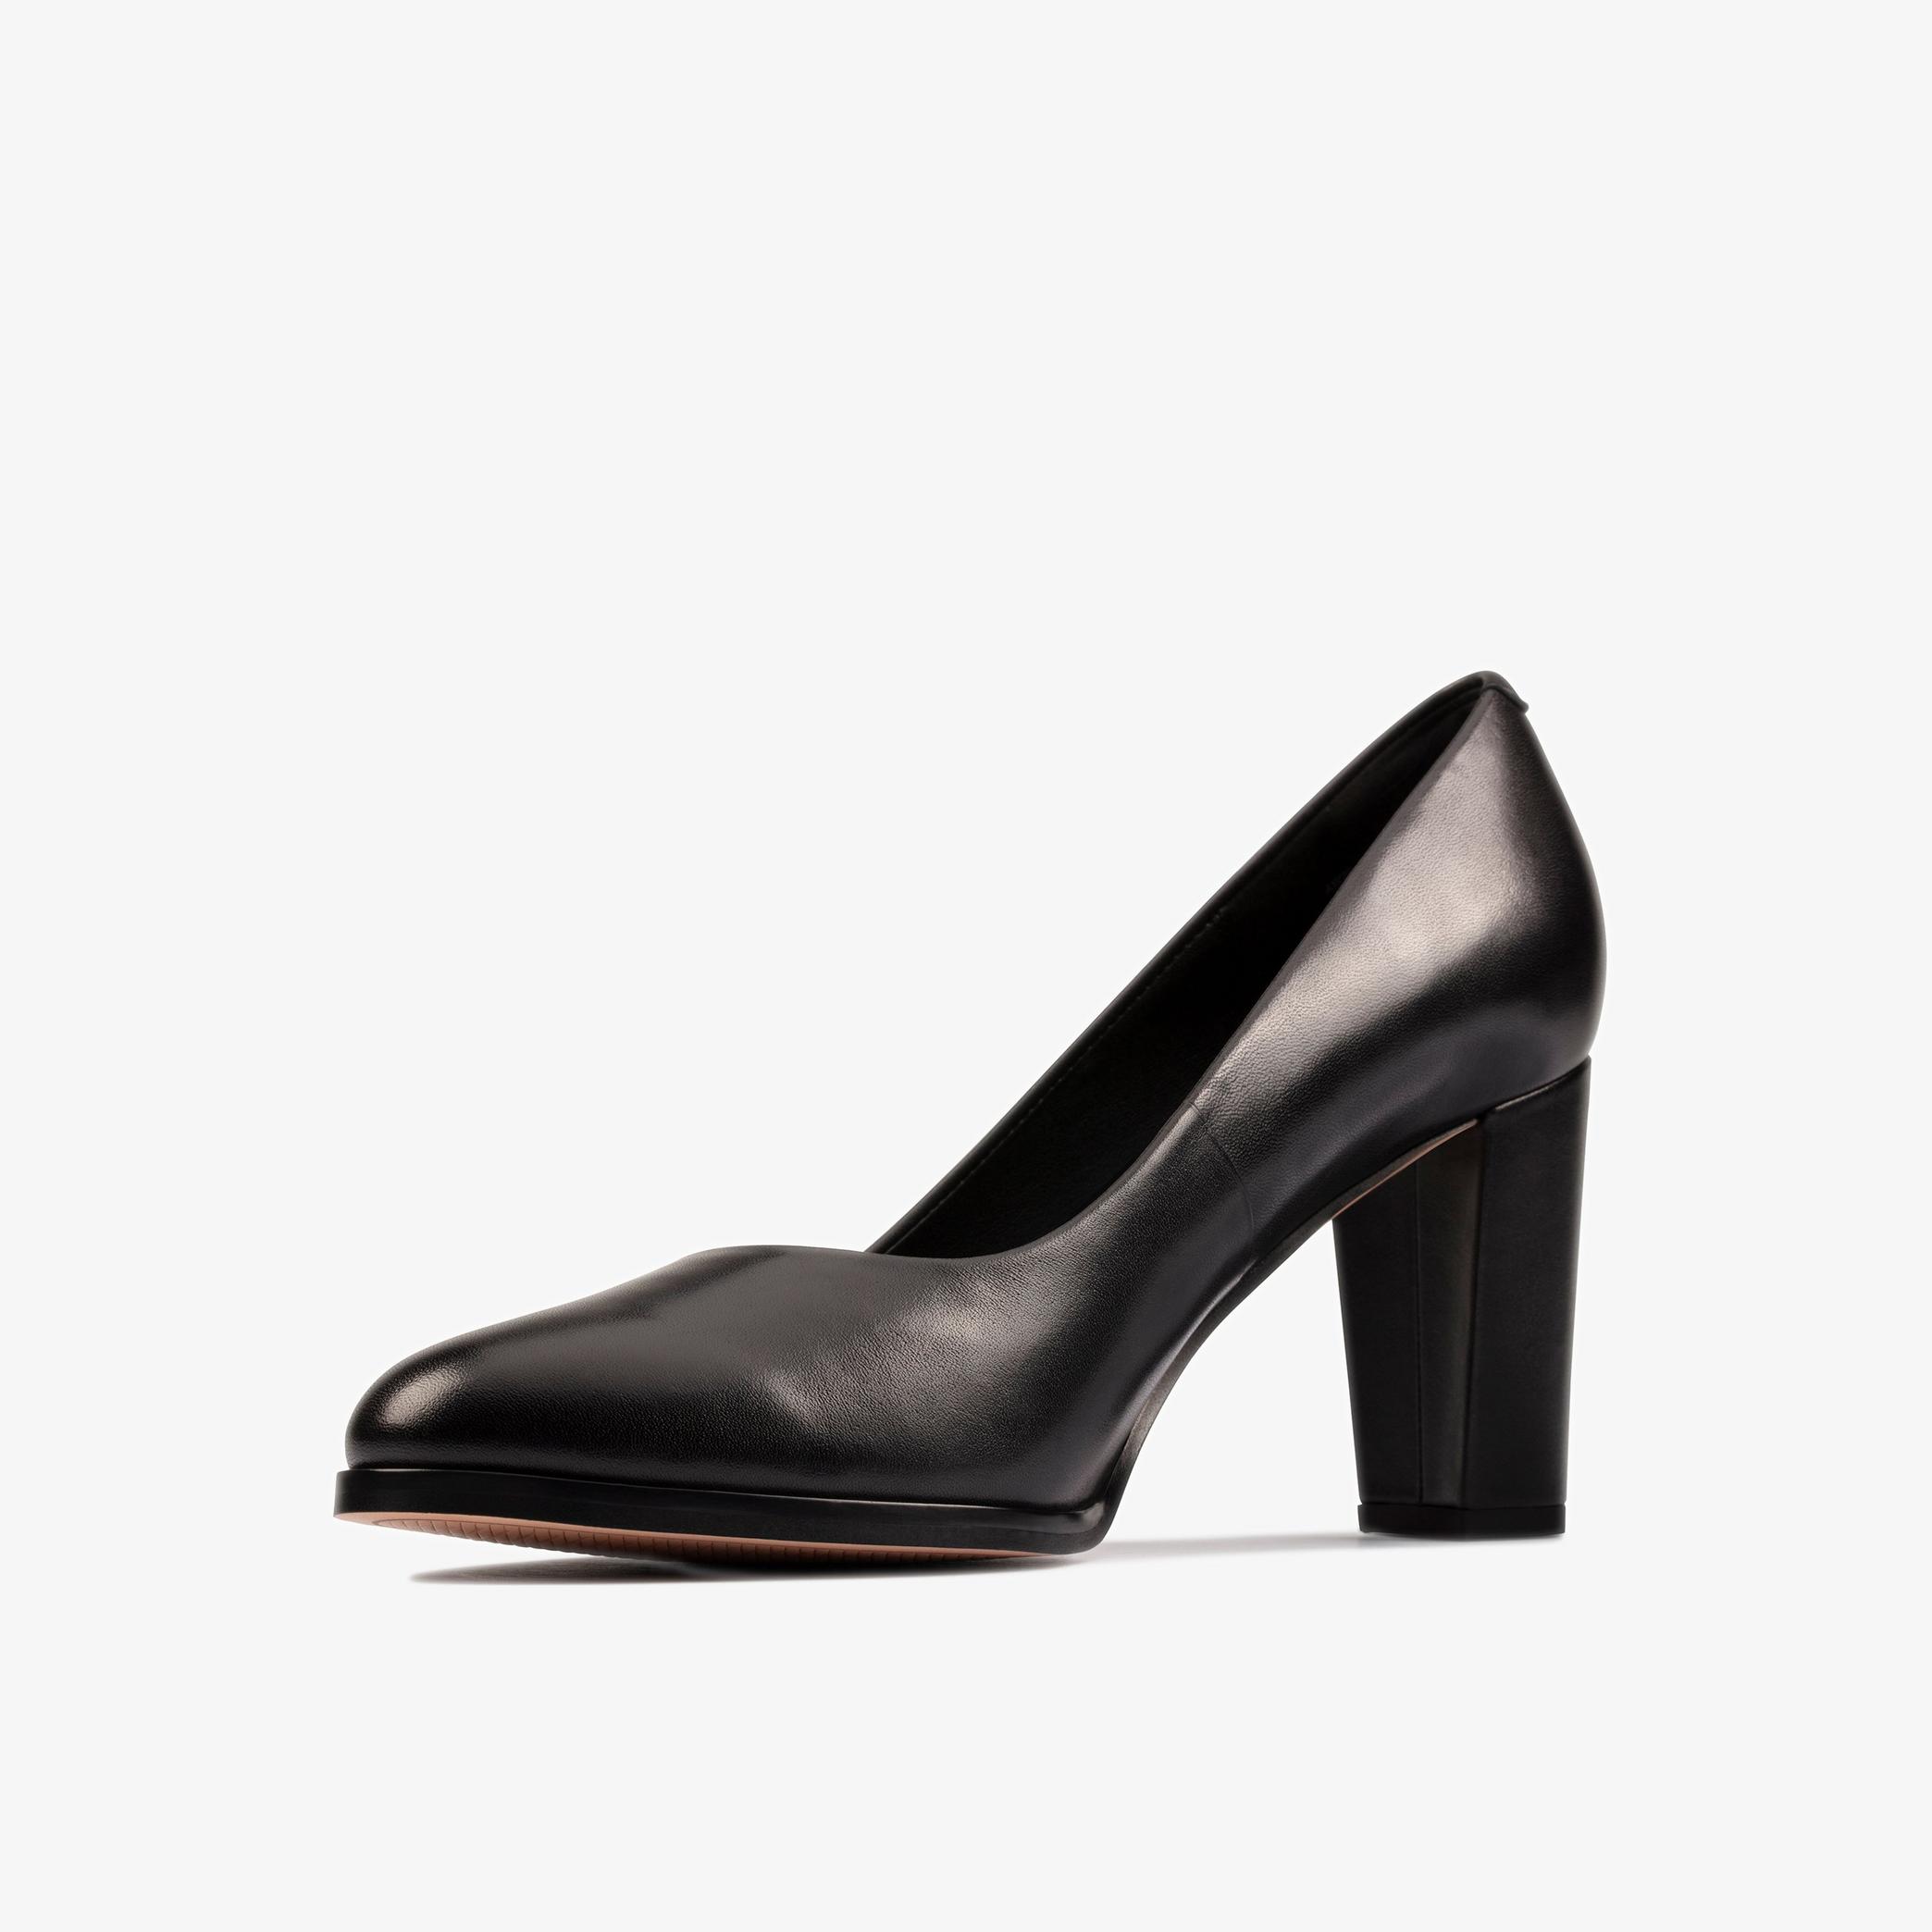 Kaylin Cara 2 Black Leather High Heels, view 4 of 6